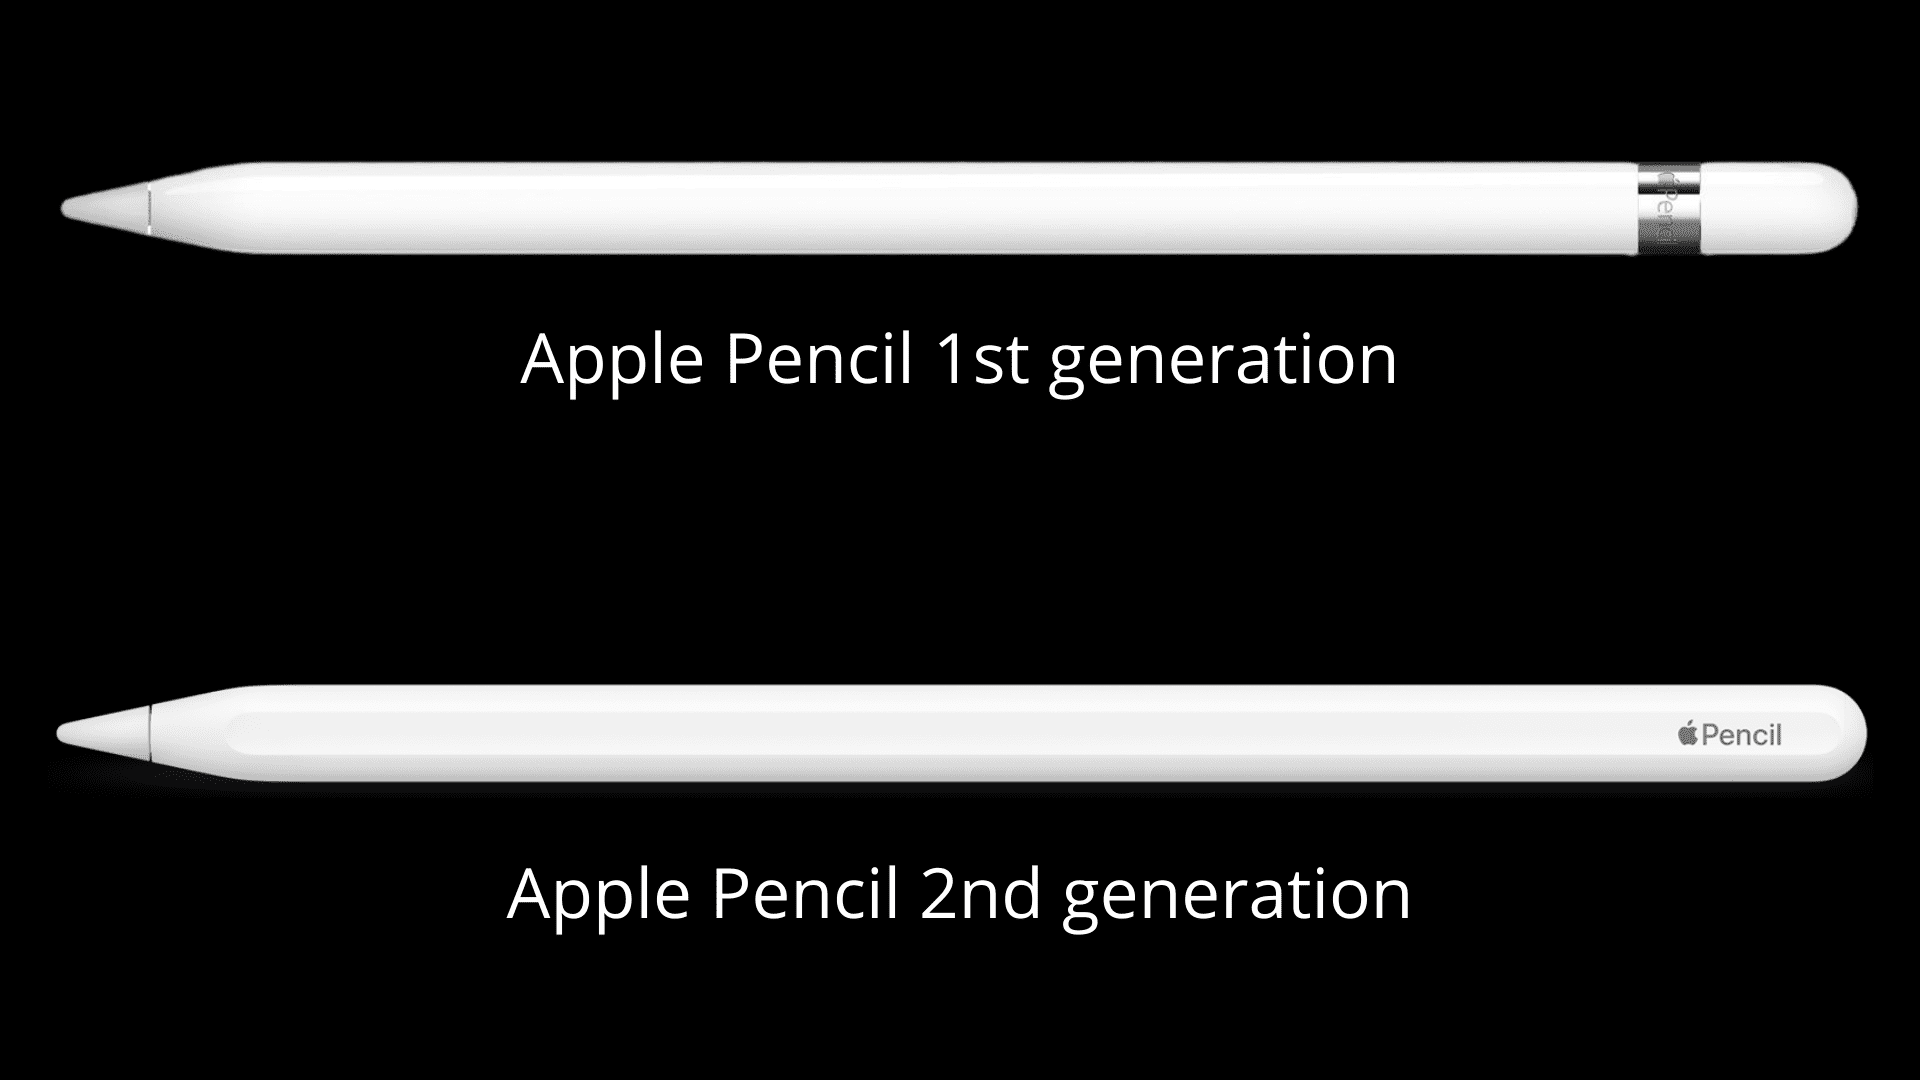 Apple Pencil 1st Generation in